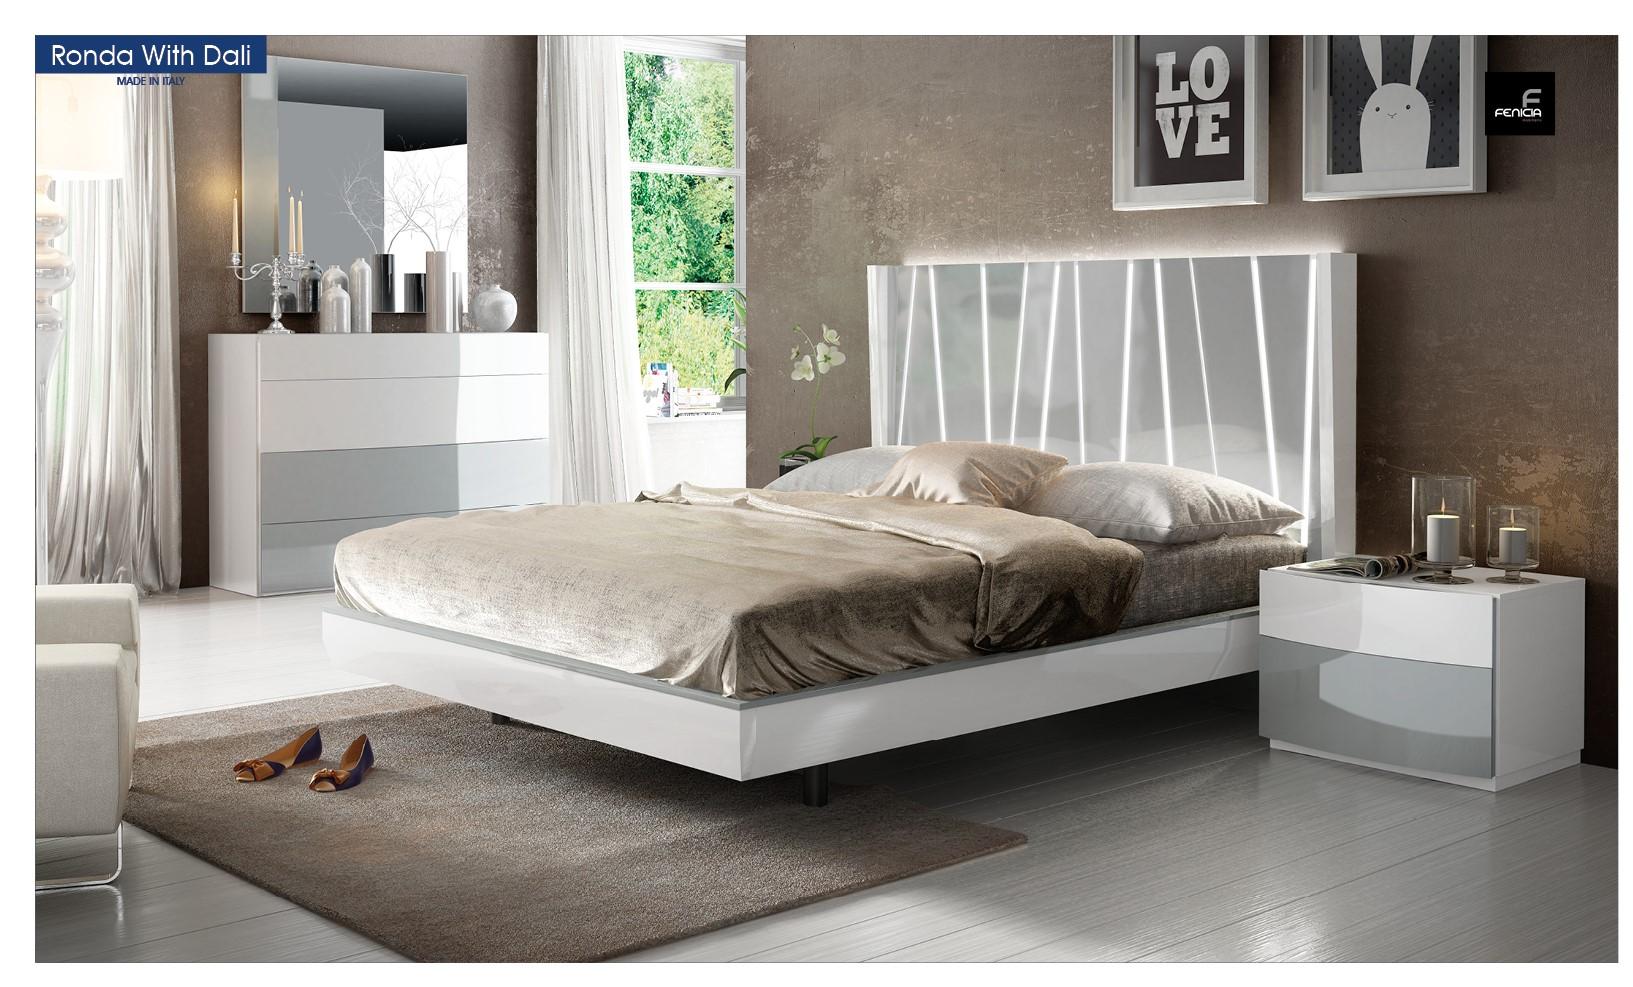 Contemporary Platform Bedroom Set Ronda DALI Ronda With Dali-Q-2NDM-5PC in White, Gray High Gloss Lacquer